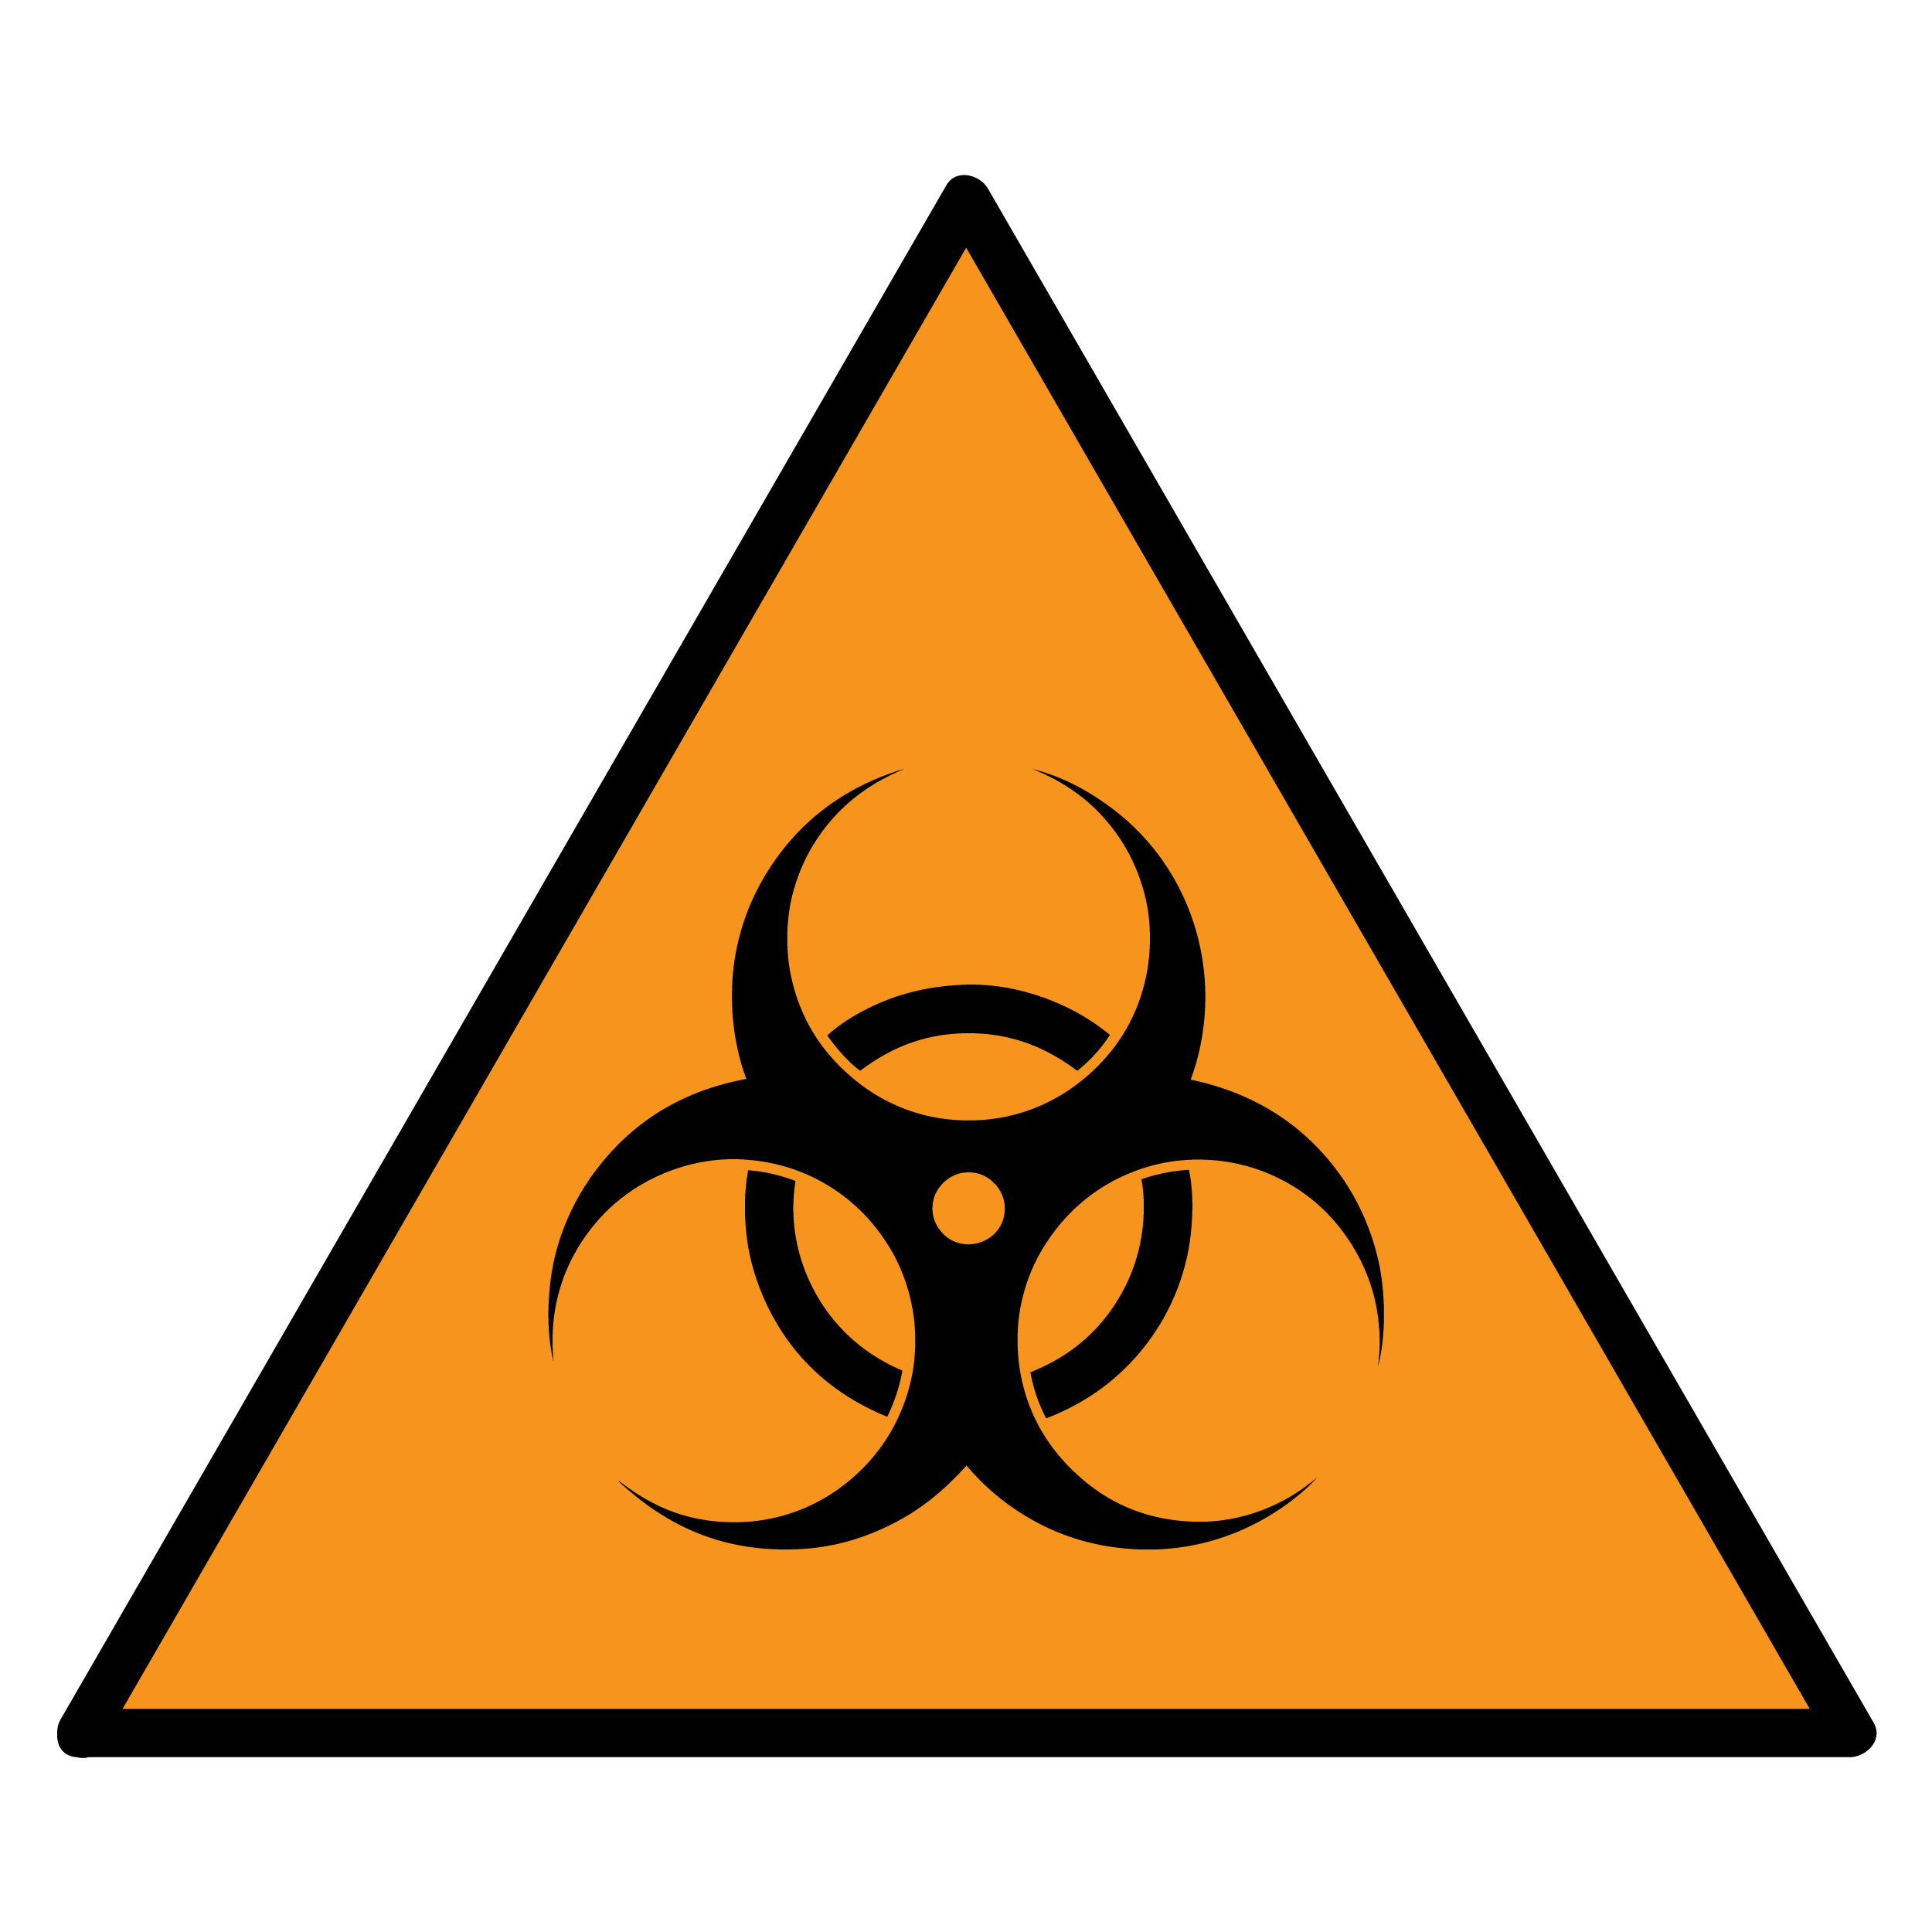 biohazard-sign-printable-tutore-org-master-of-documents